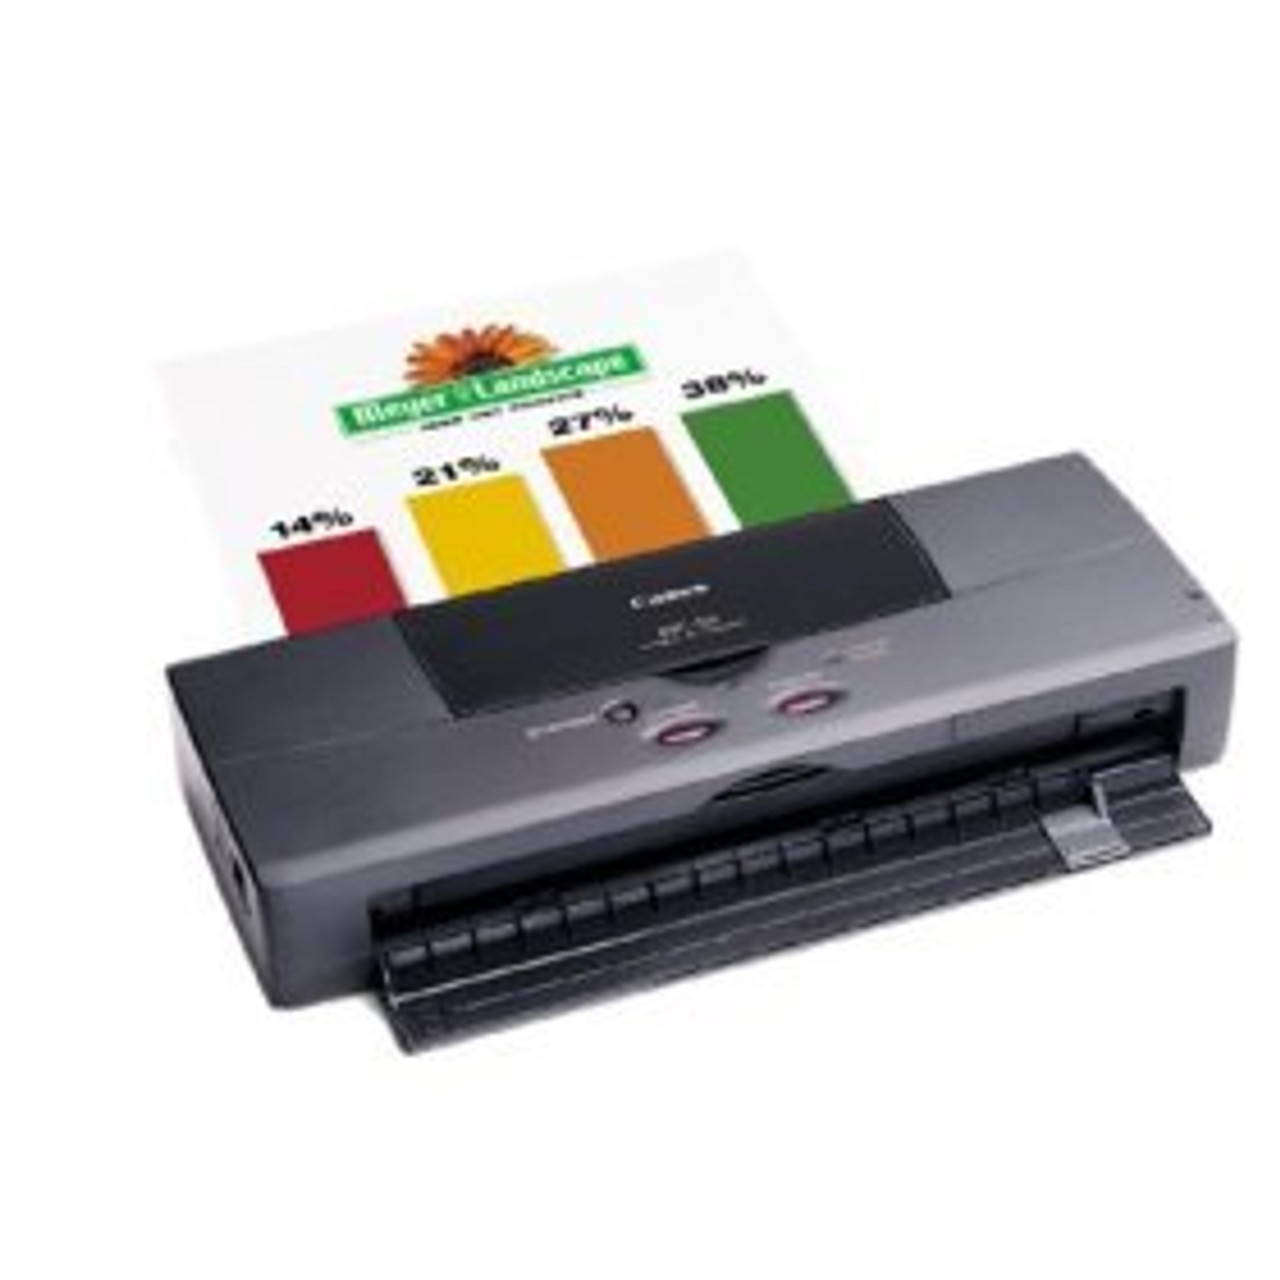 BJC-55 Portable Printer Scanner